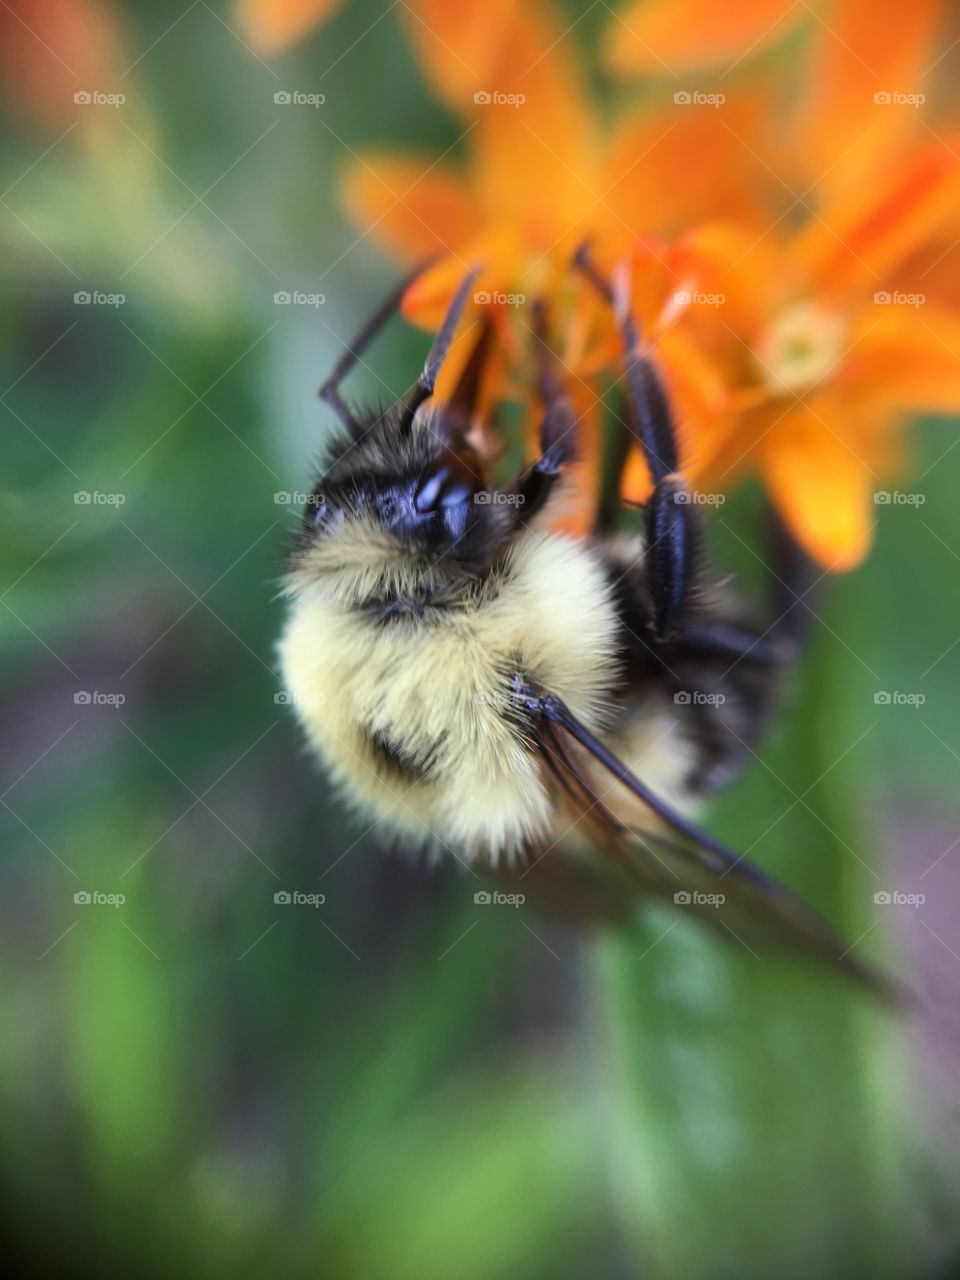 Upside down bumblebee